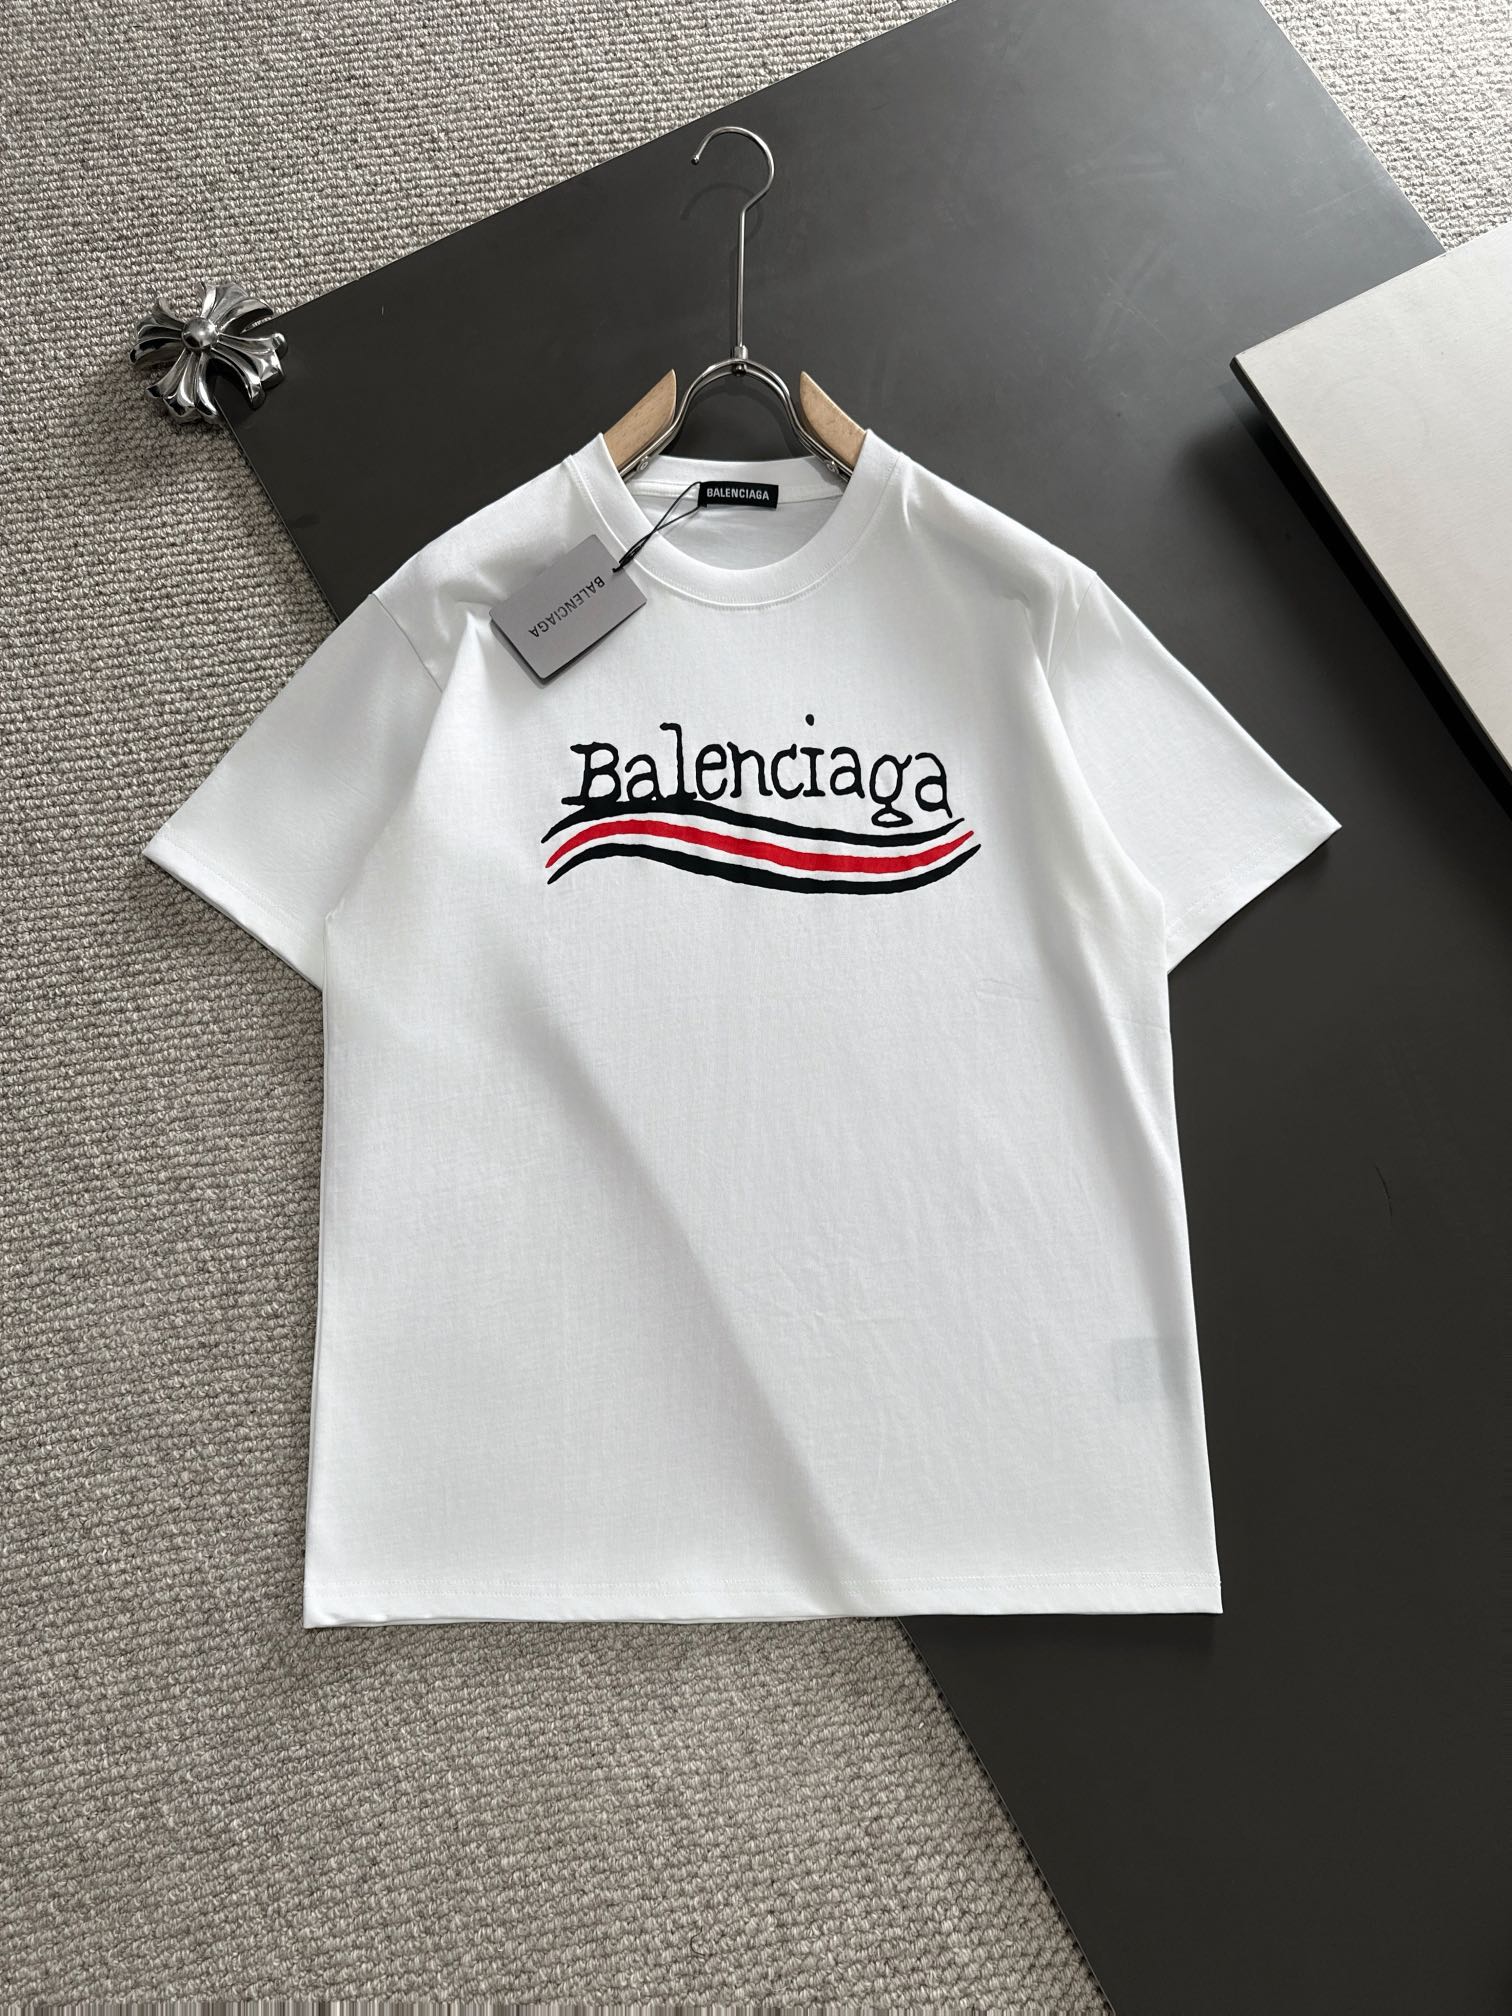 Balenciaga Clothing T-Shirt Black Grey Red White Printing Unisex Short Sleeve